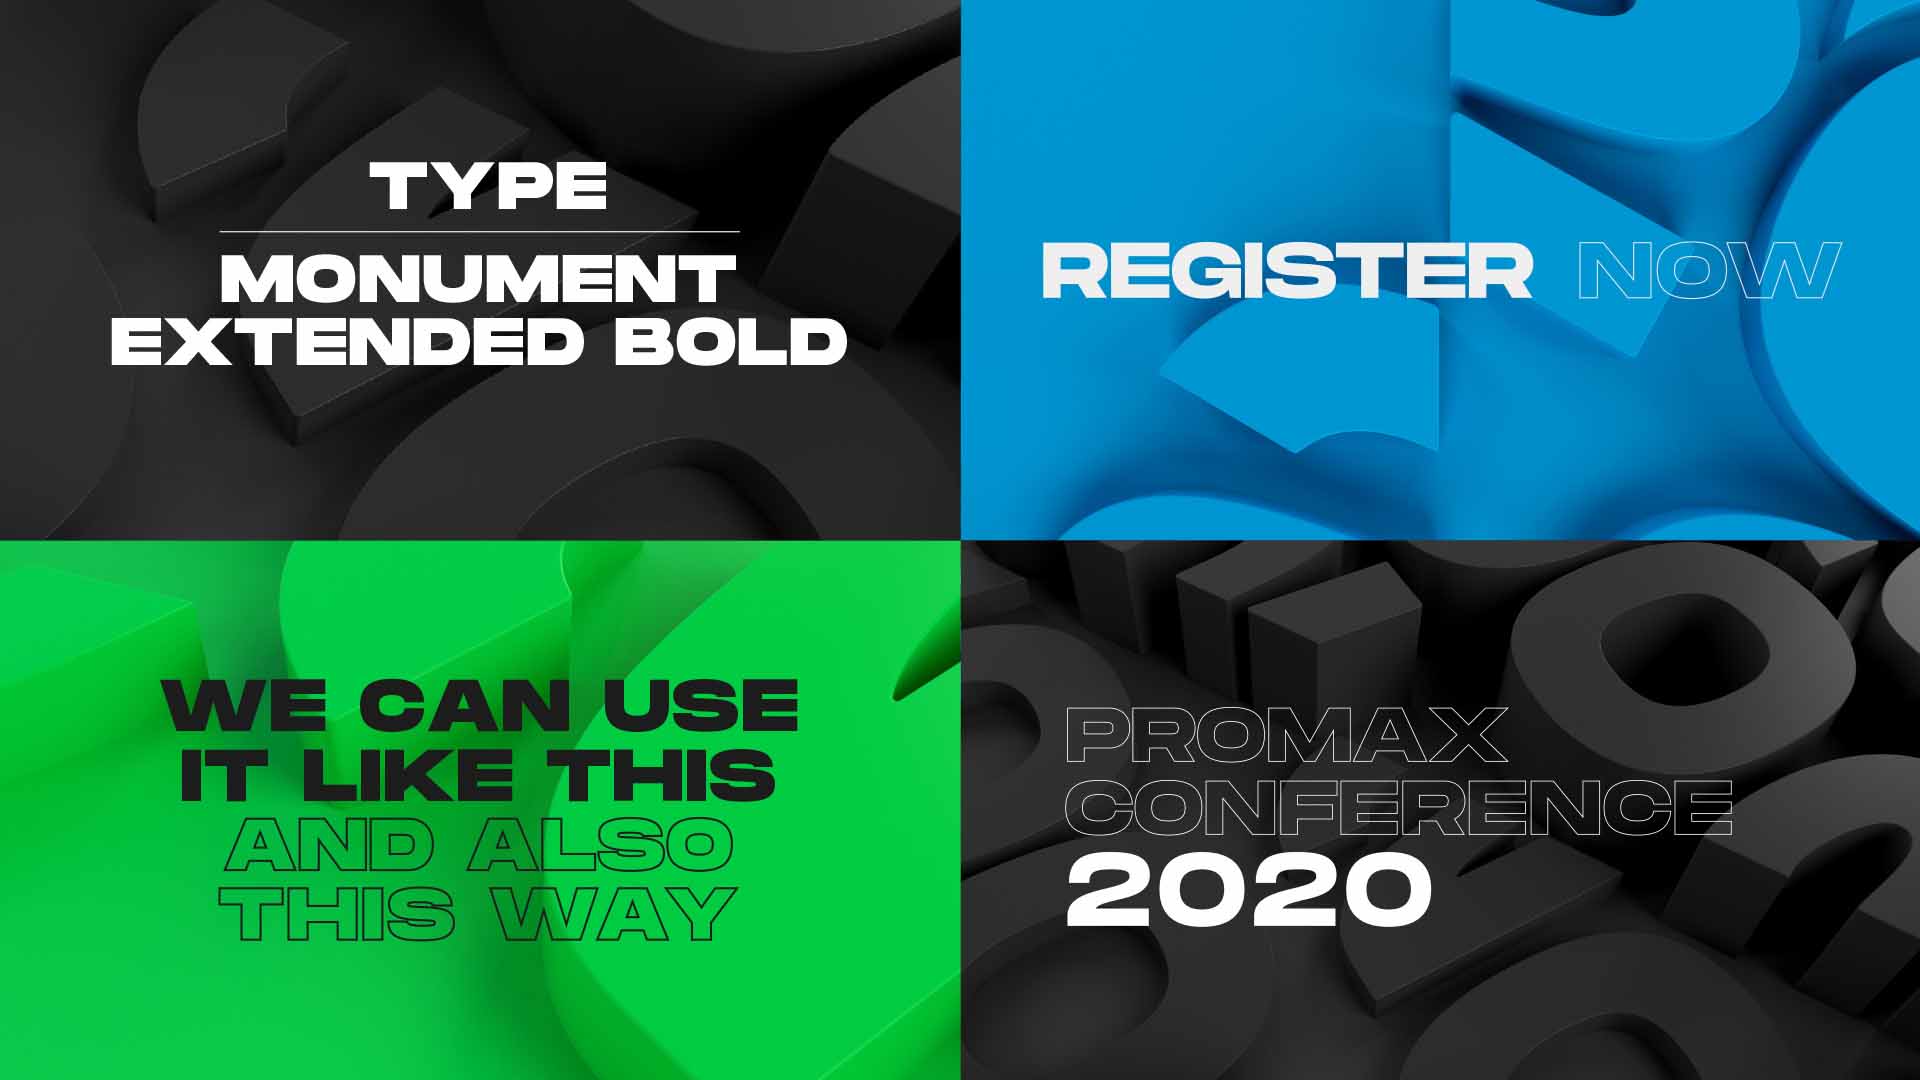 PromaxBDA Conference Branding.